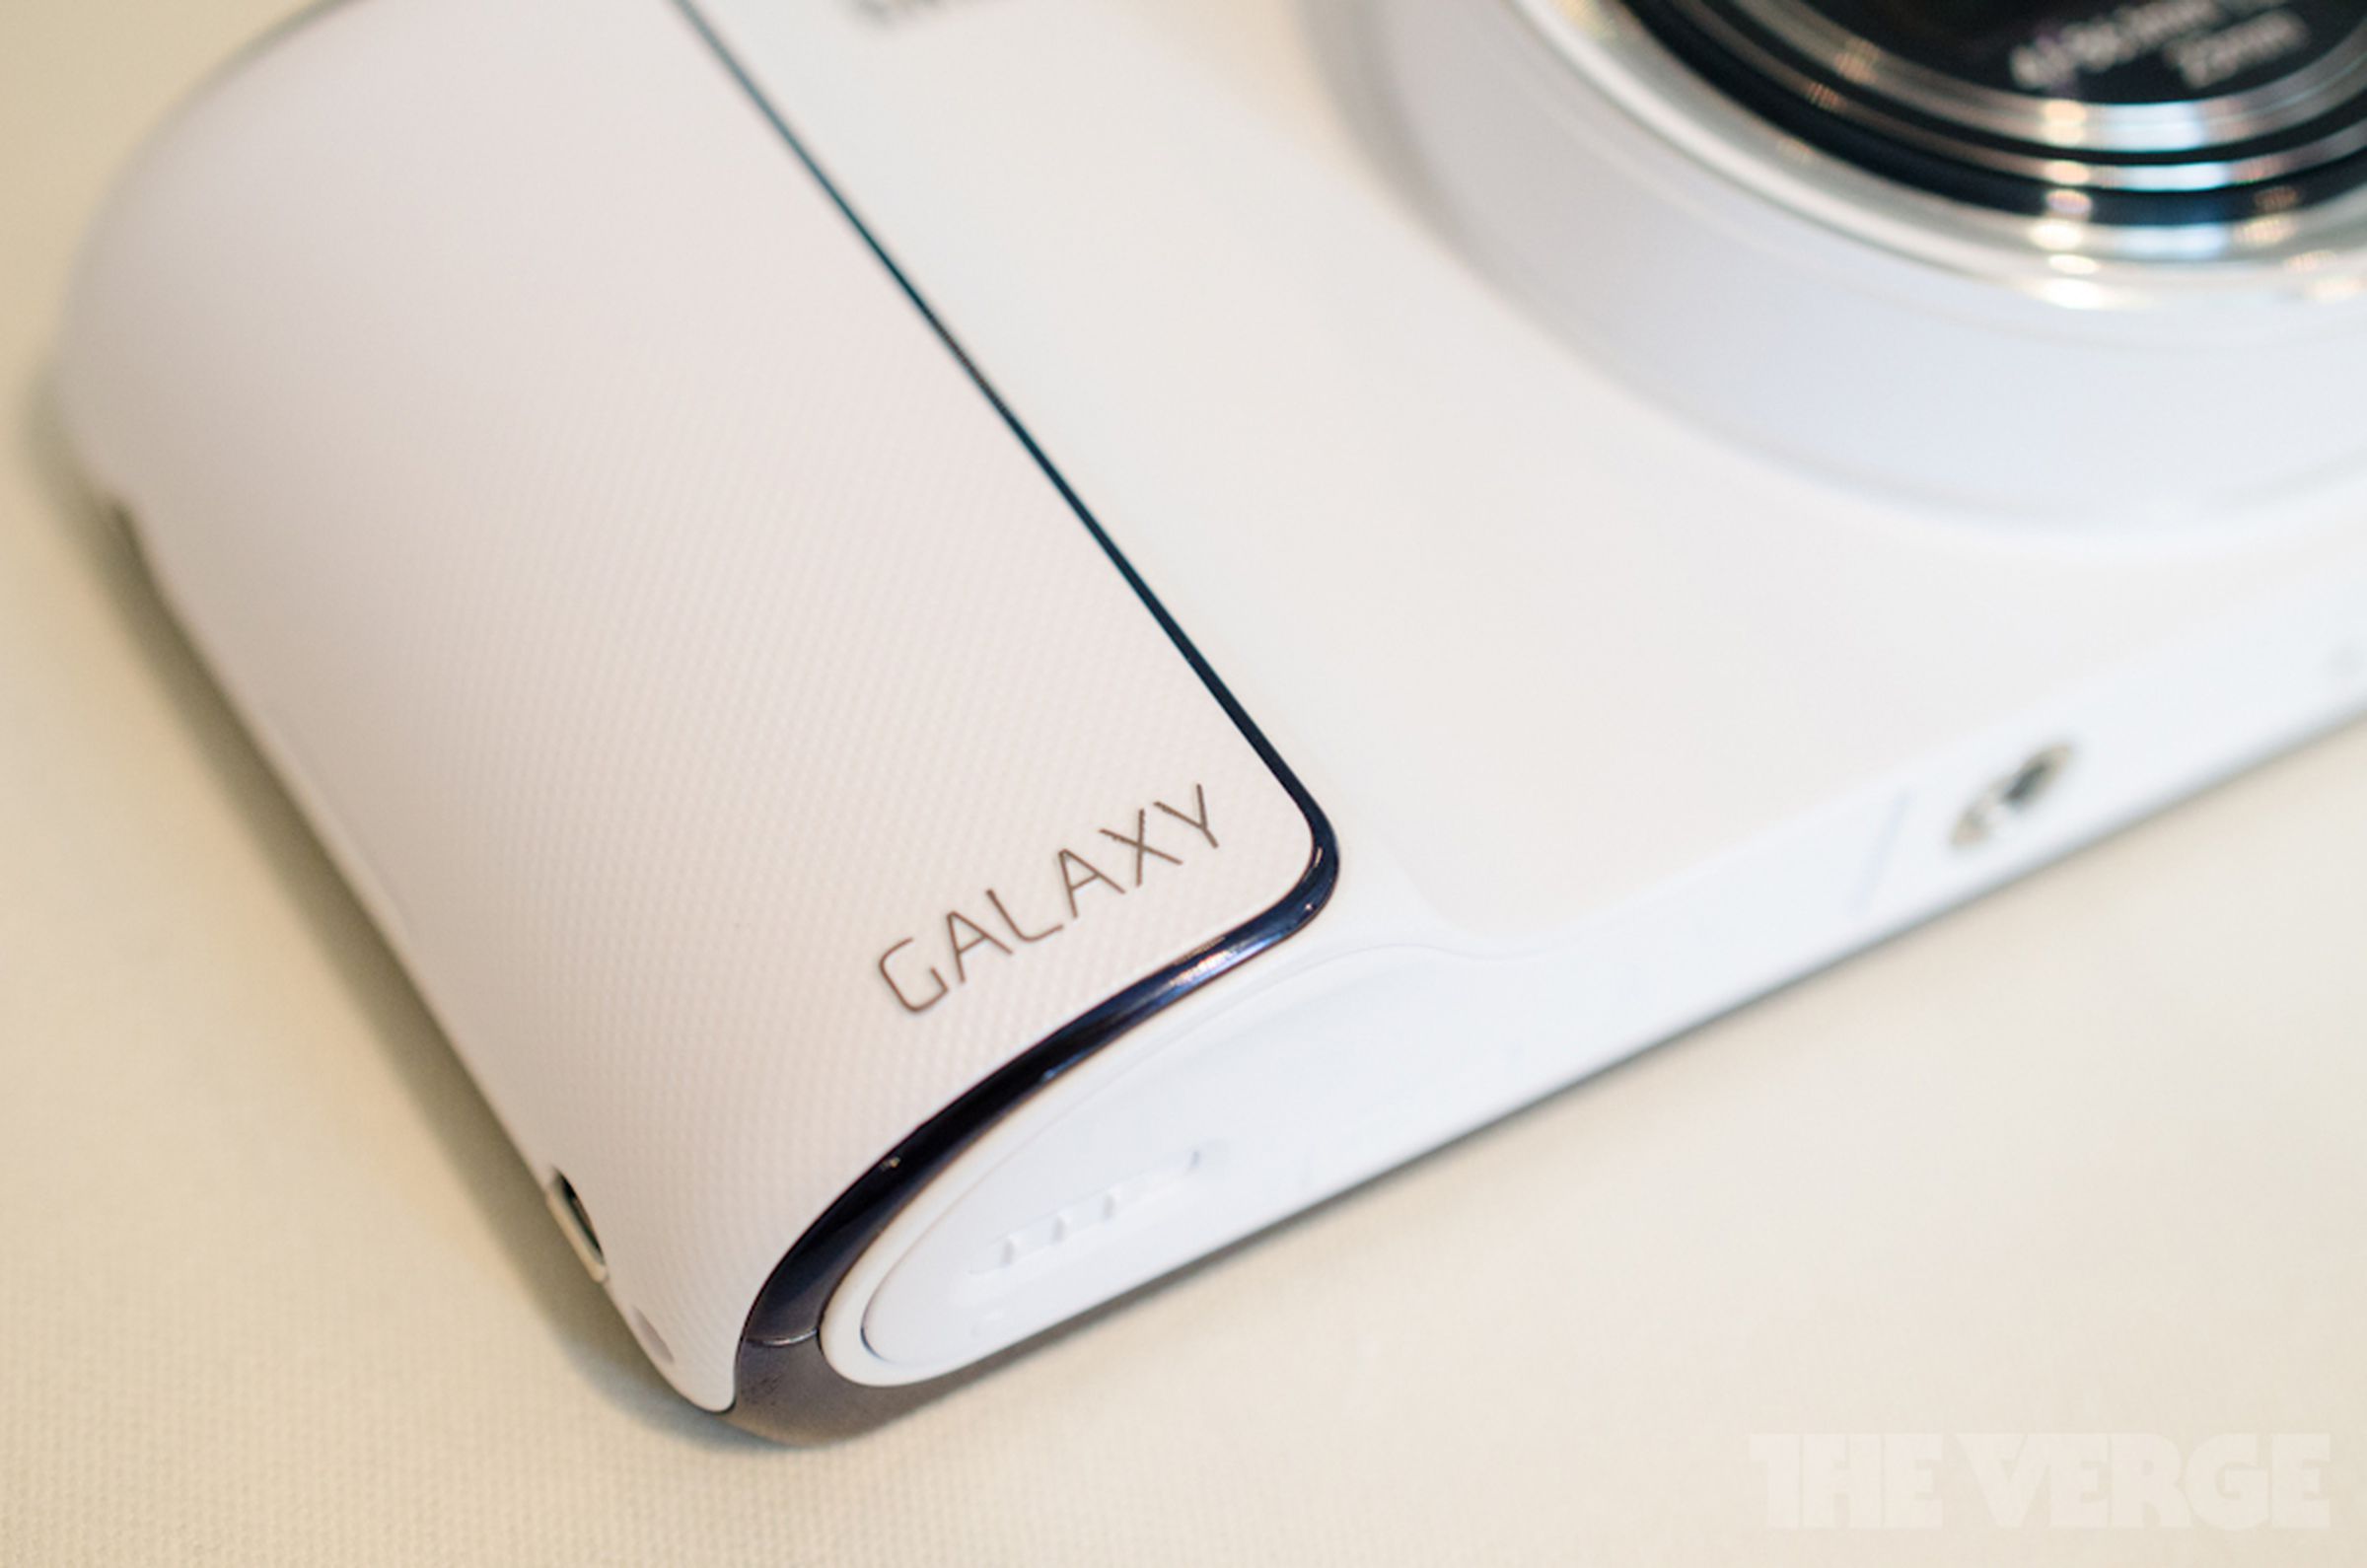 Samsung Galaxy Camera hands-on photos